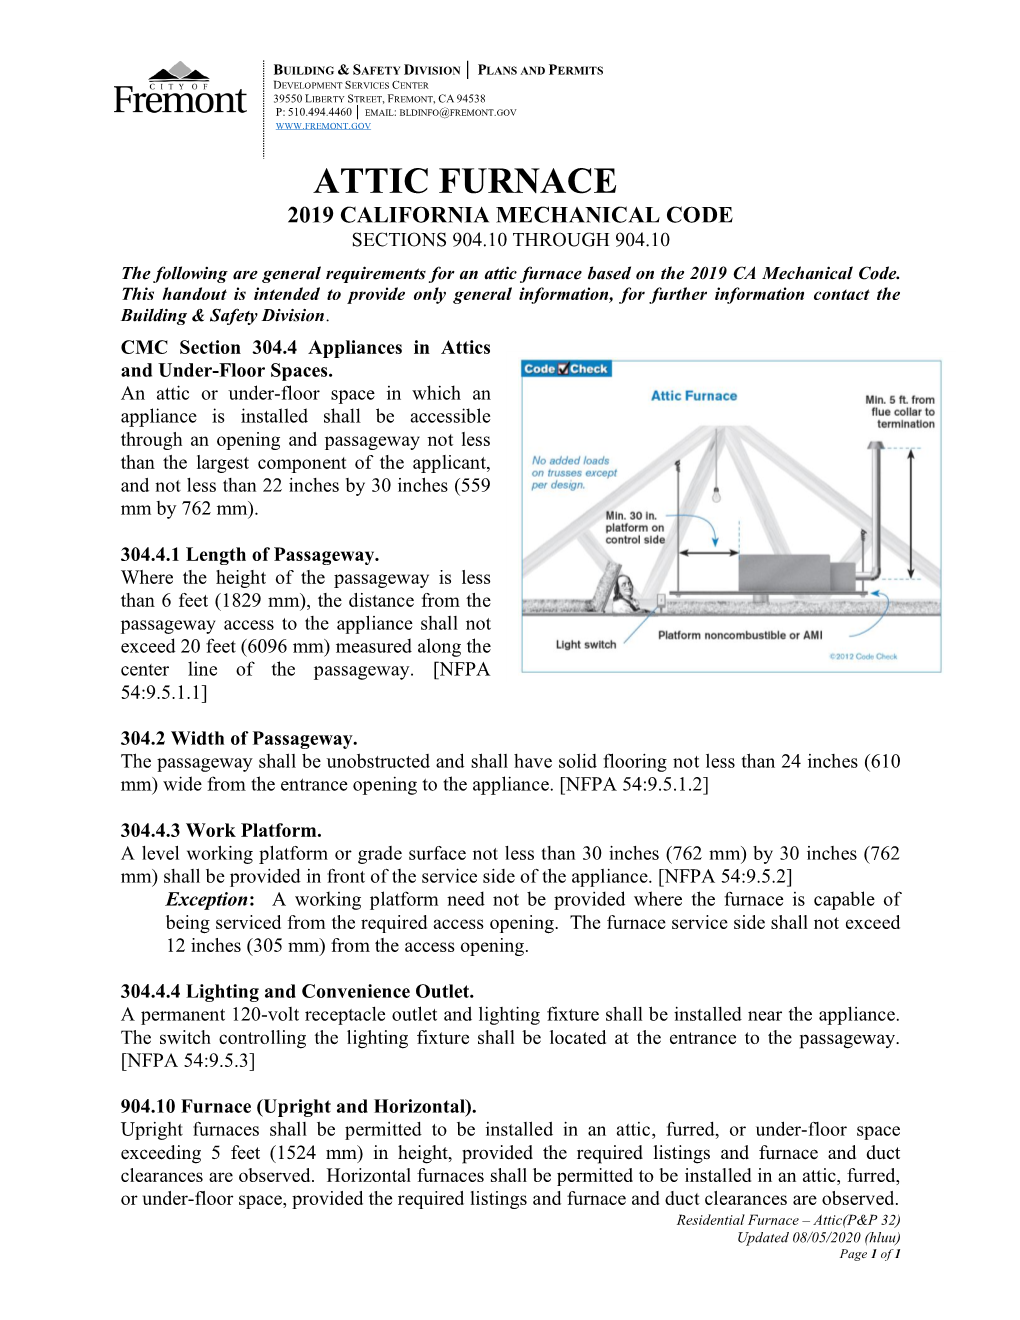 Attic Furnace 2019 California Mechanical Code Sections 904.10 Through 904.10